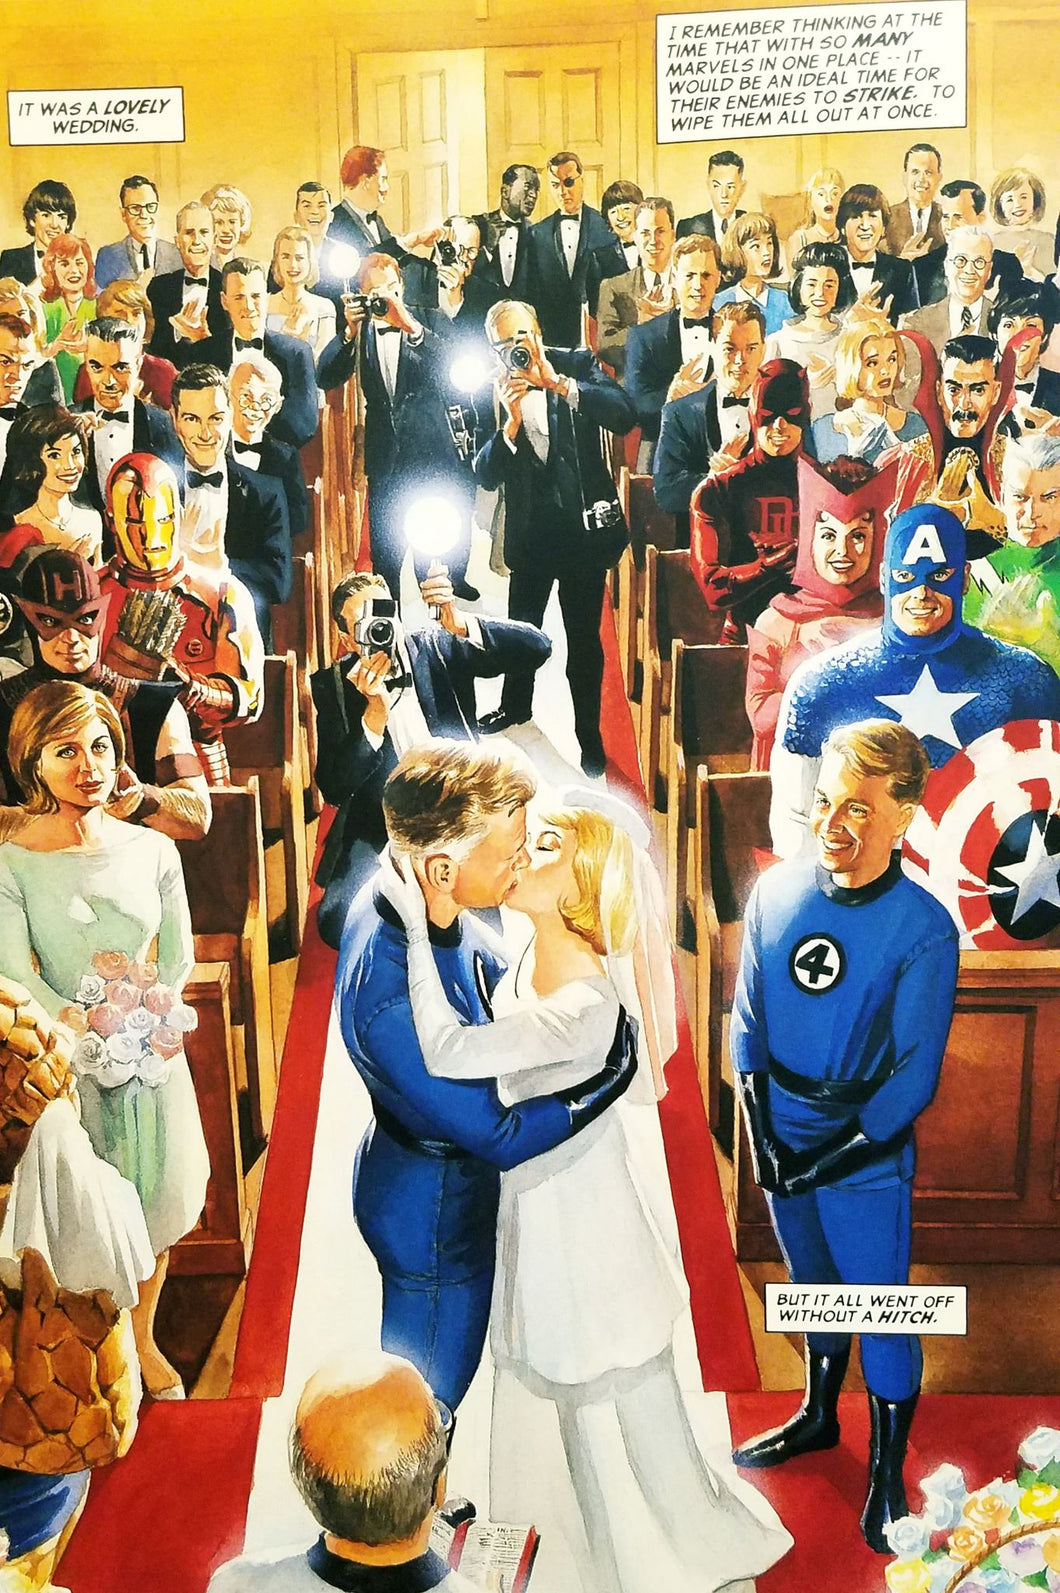 Fantastic Four Wedding Marvels 11x16 Art Print by Alex Ross, New Marvel Comics cardstock